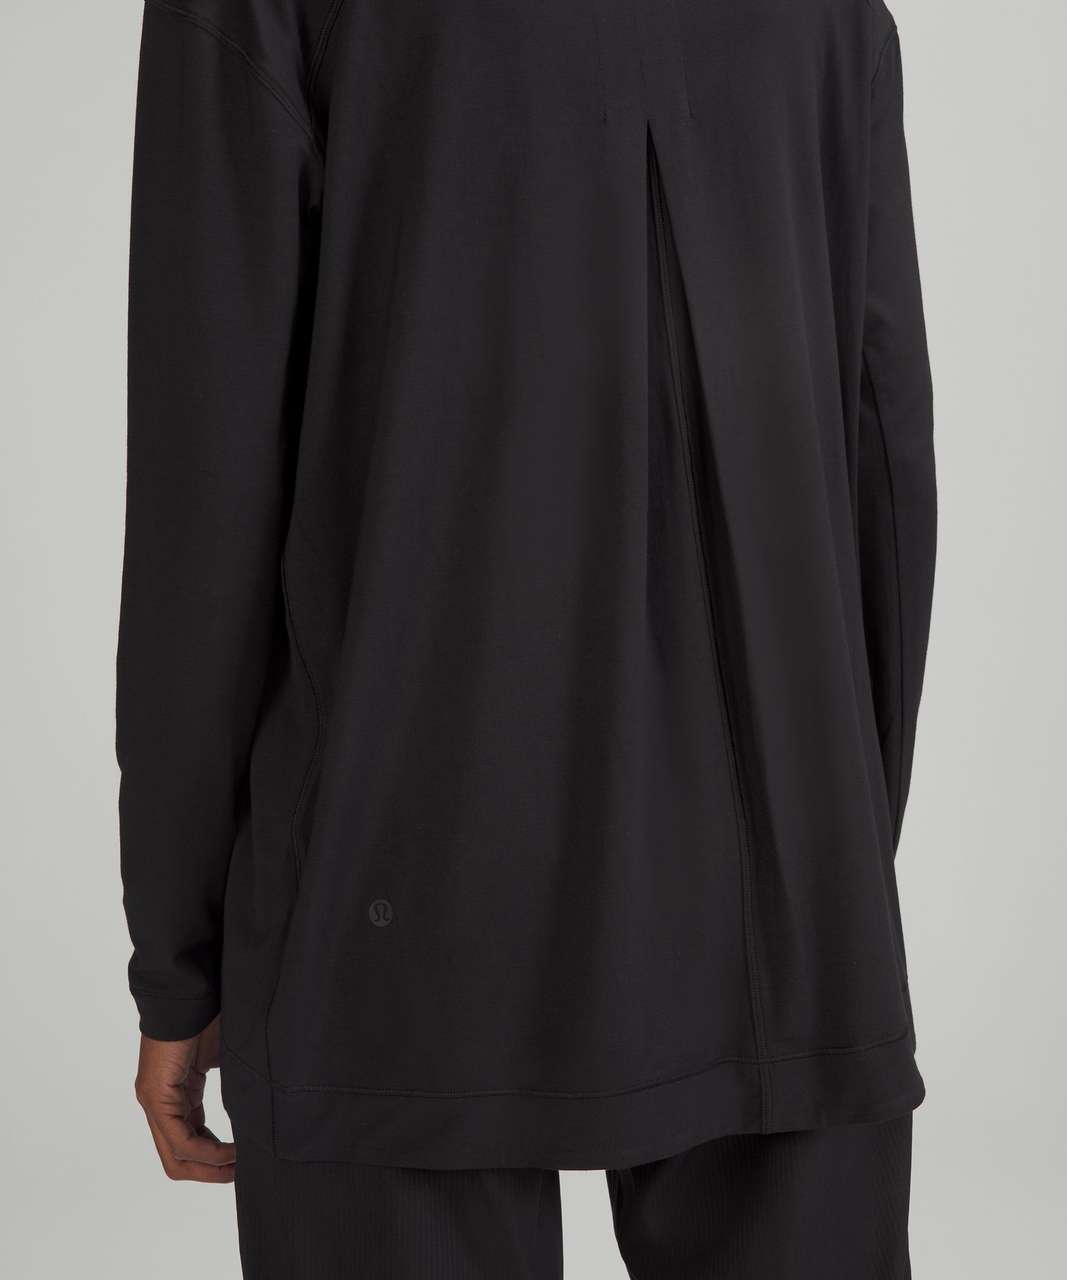 Lululemon Modal Pleated Back Long Sleeve Shirt - Black